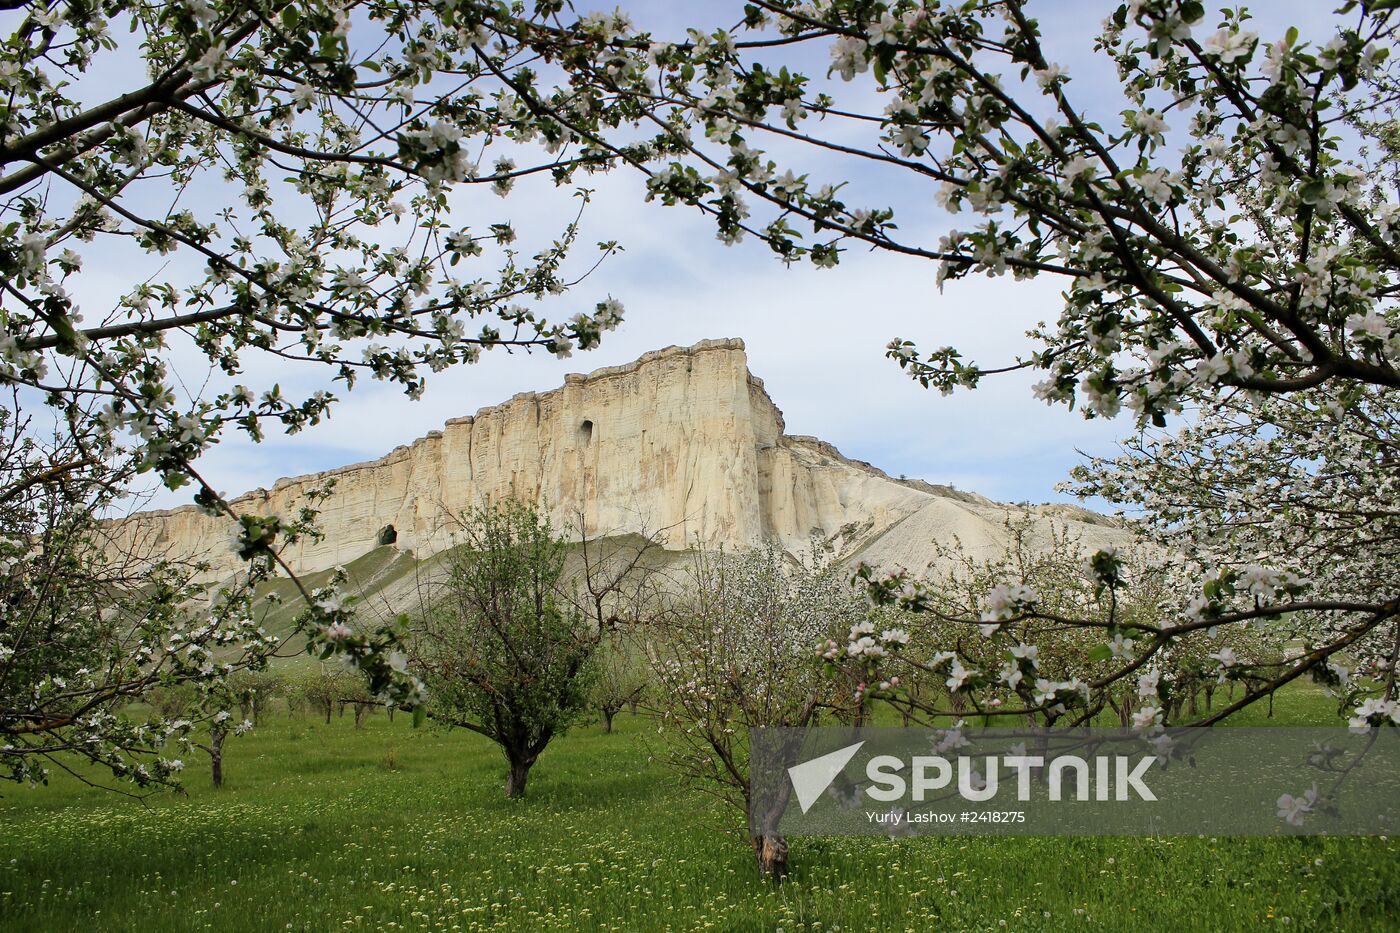 Belaya Skala (White Cliff) in the Crimea's Belogorsky District